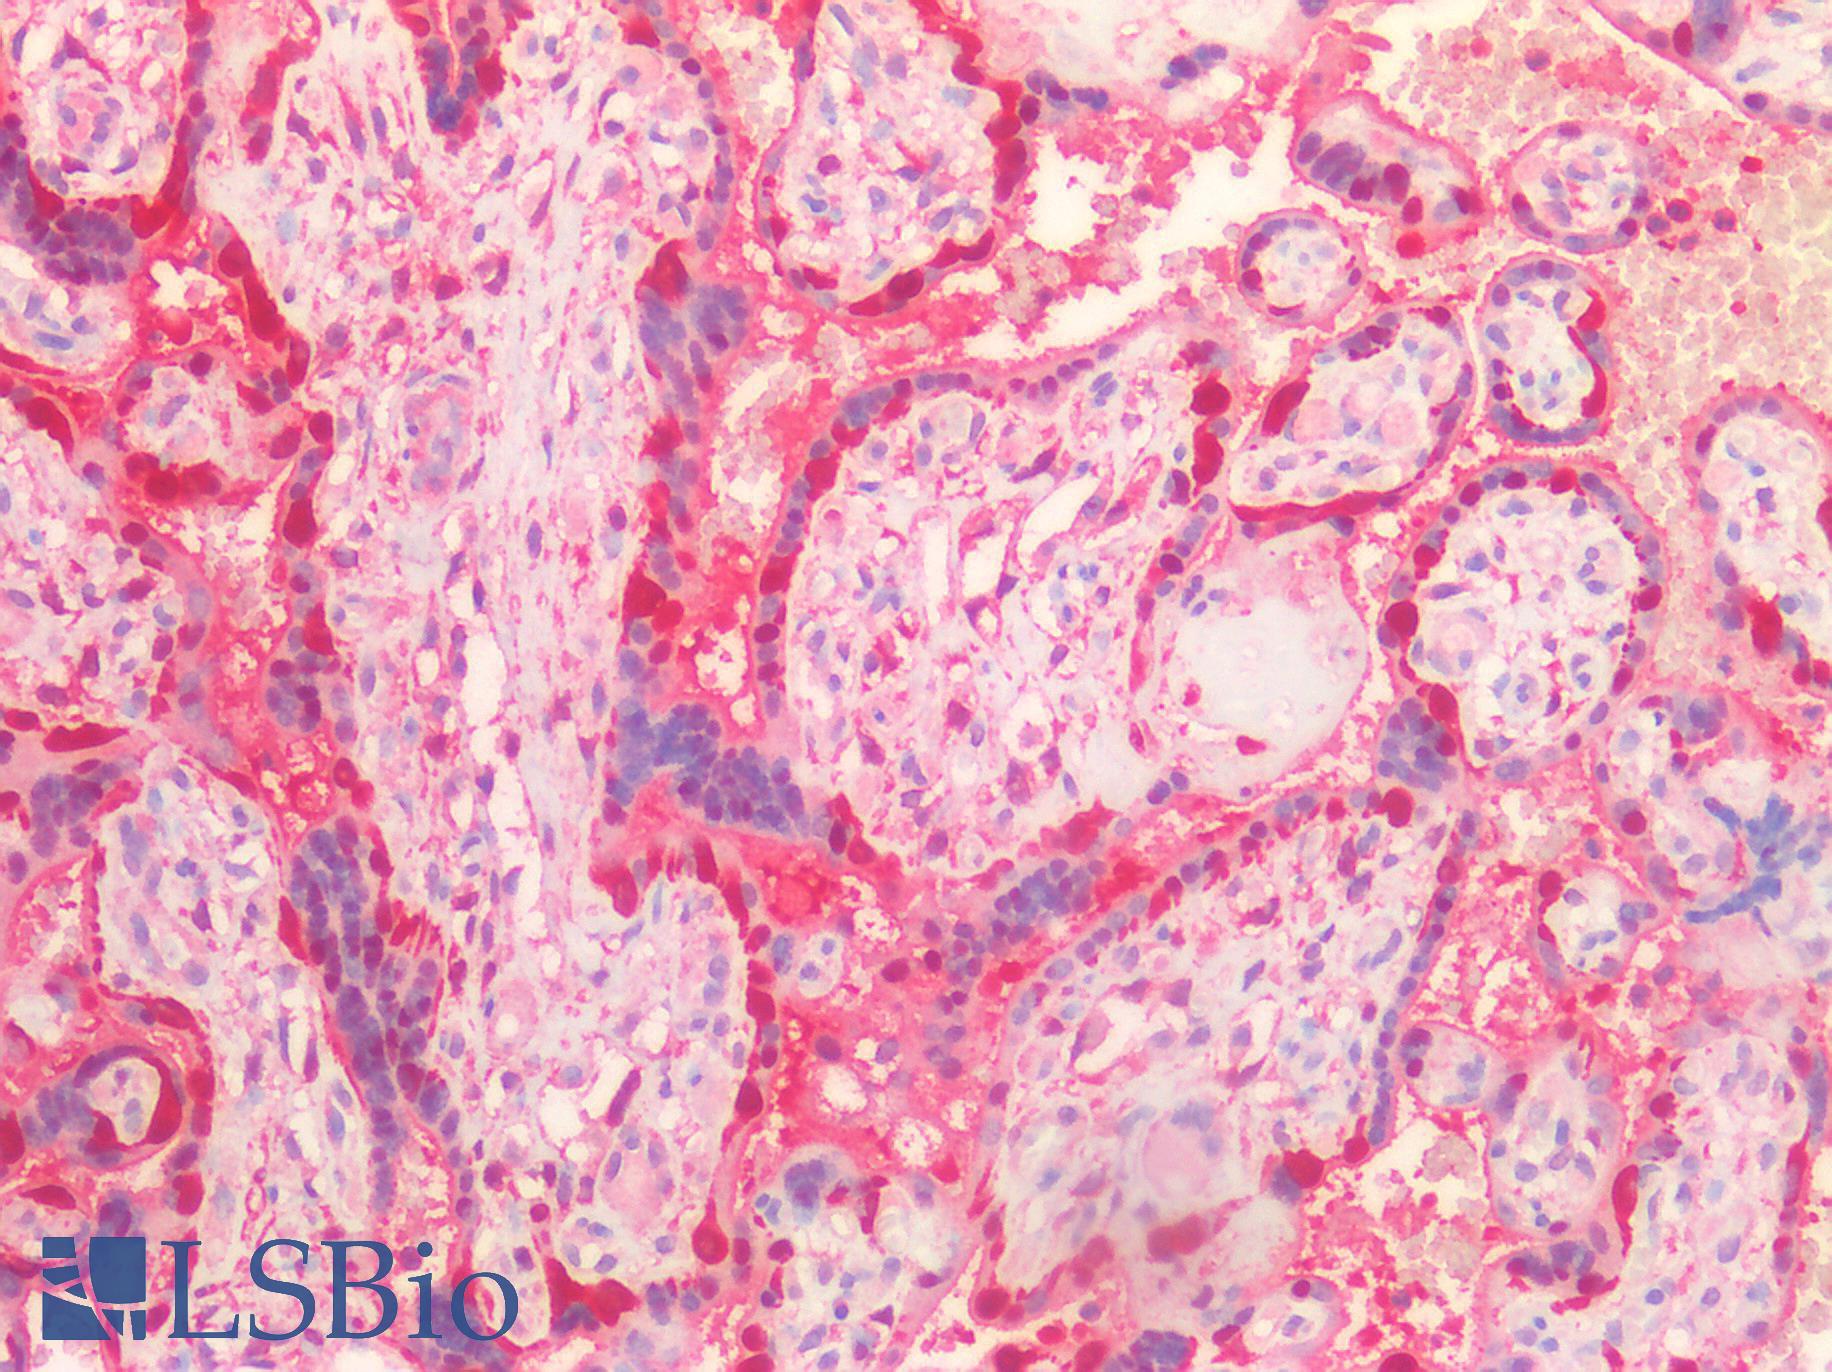 LDHB / Lactate Dehydrogenase B Antibody - Human Placenta: Formalin-Fixed, Paraffin-Embedded (FFPE)